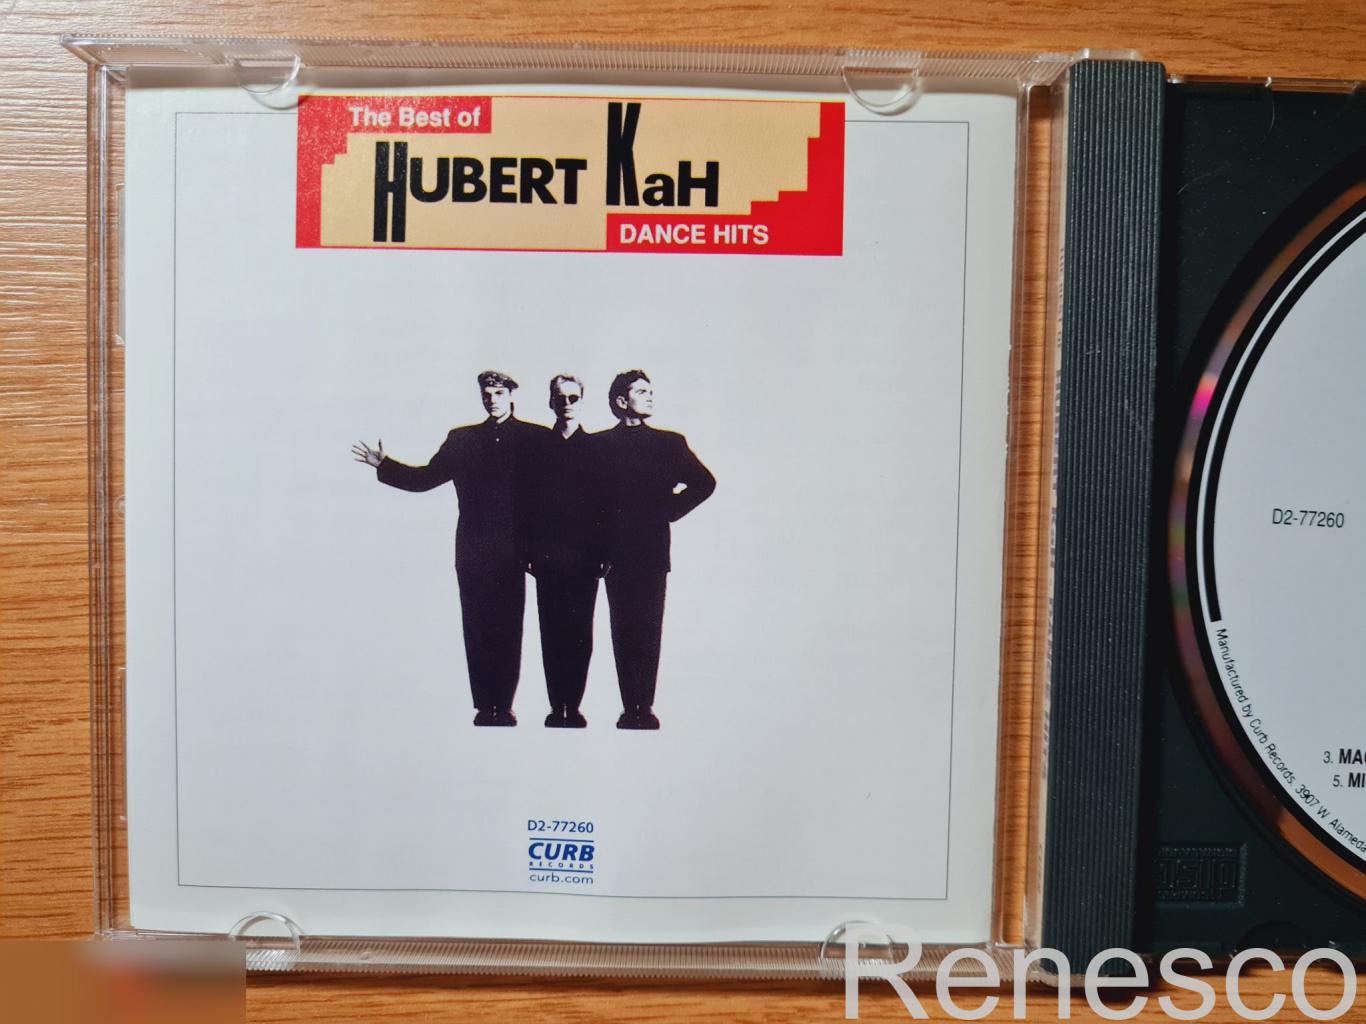 Hubert KaH – Best Of Dance Hits (USA) (Reissue) 3